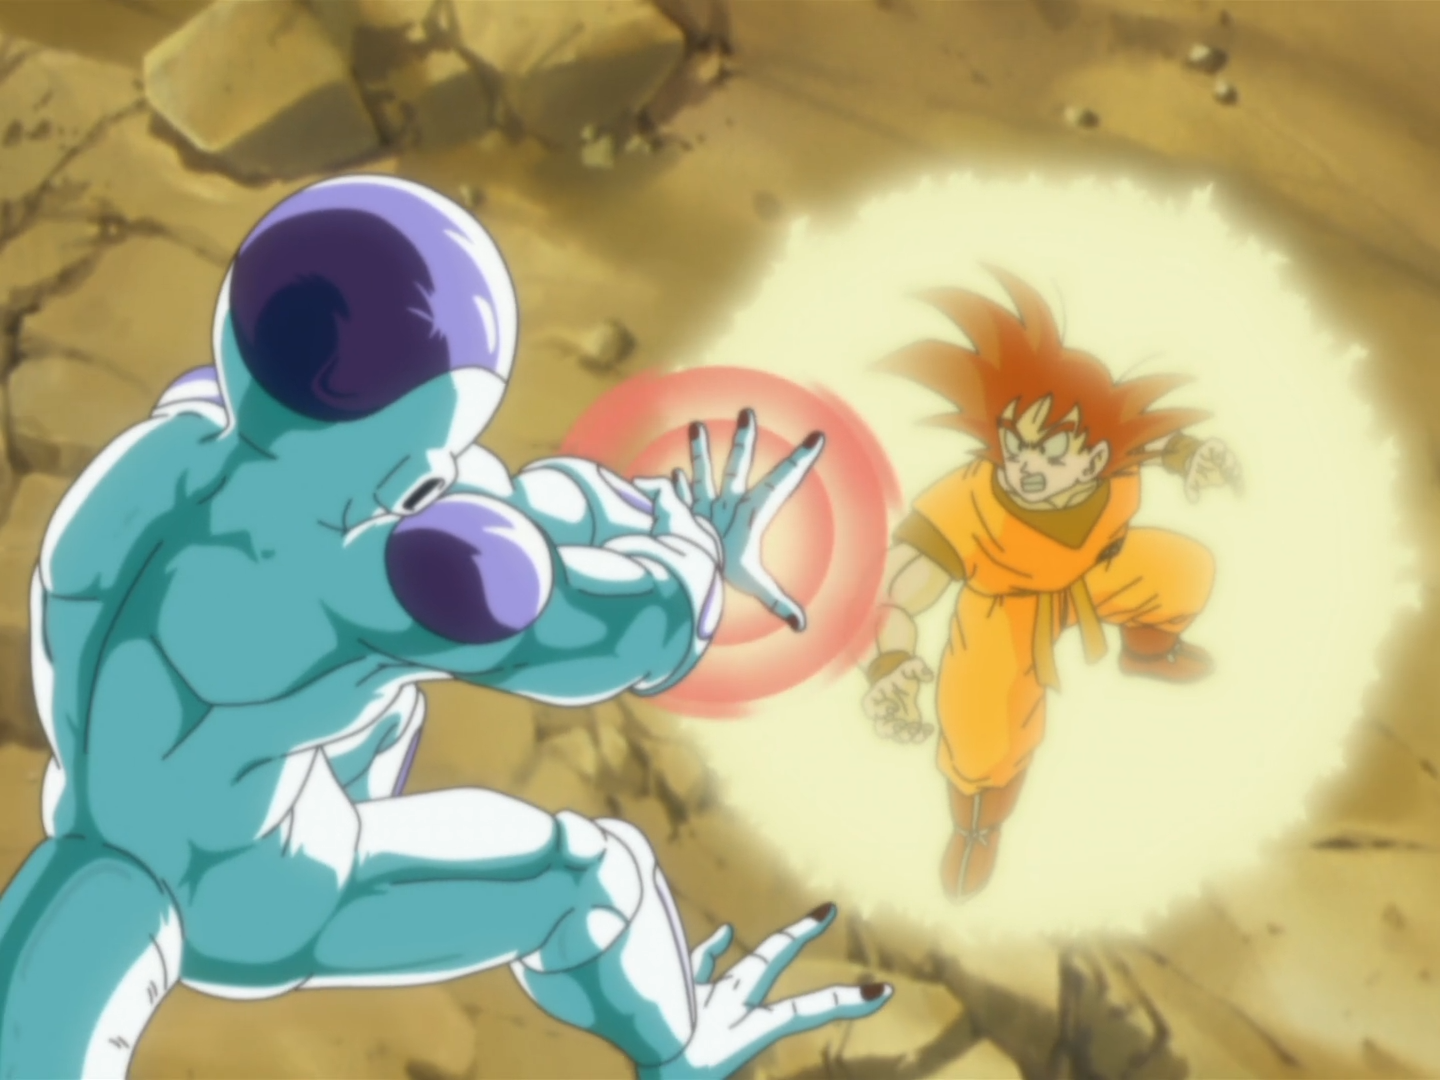 The Dragon Blog: Dragon Ball Kai ep 43 - Son Goku vs Freeza! The